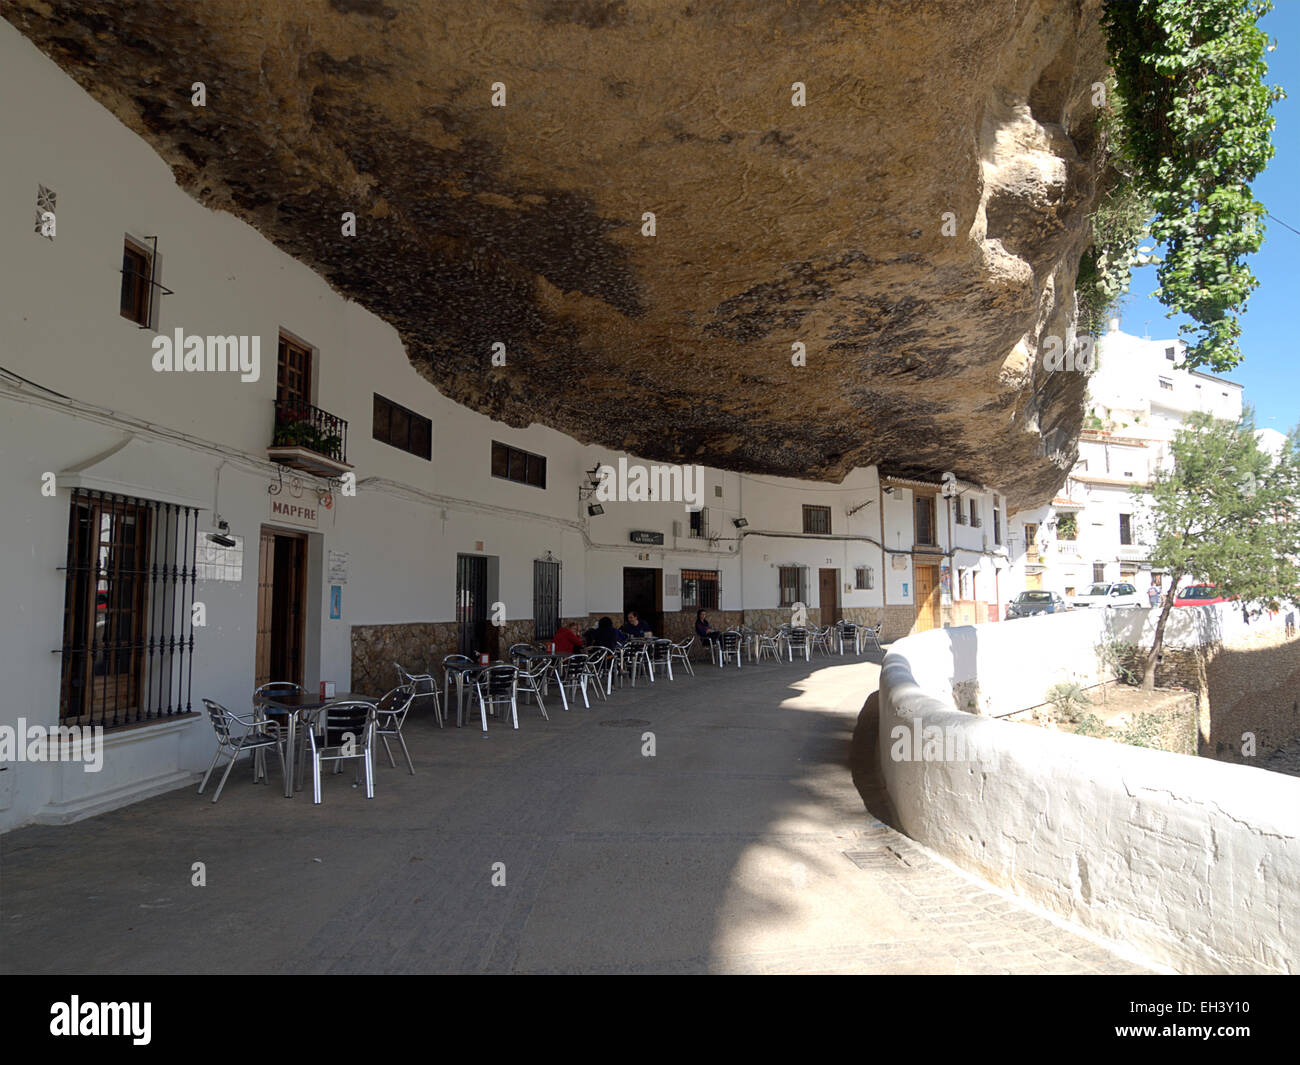 Houses in the town of Setenil de las Bodegas, Cadiz Province, Spain Stock  Photo - Alamy